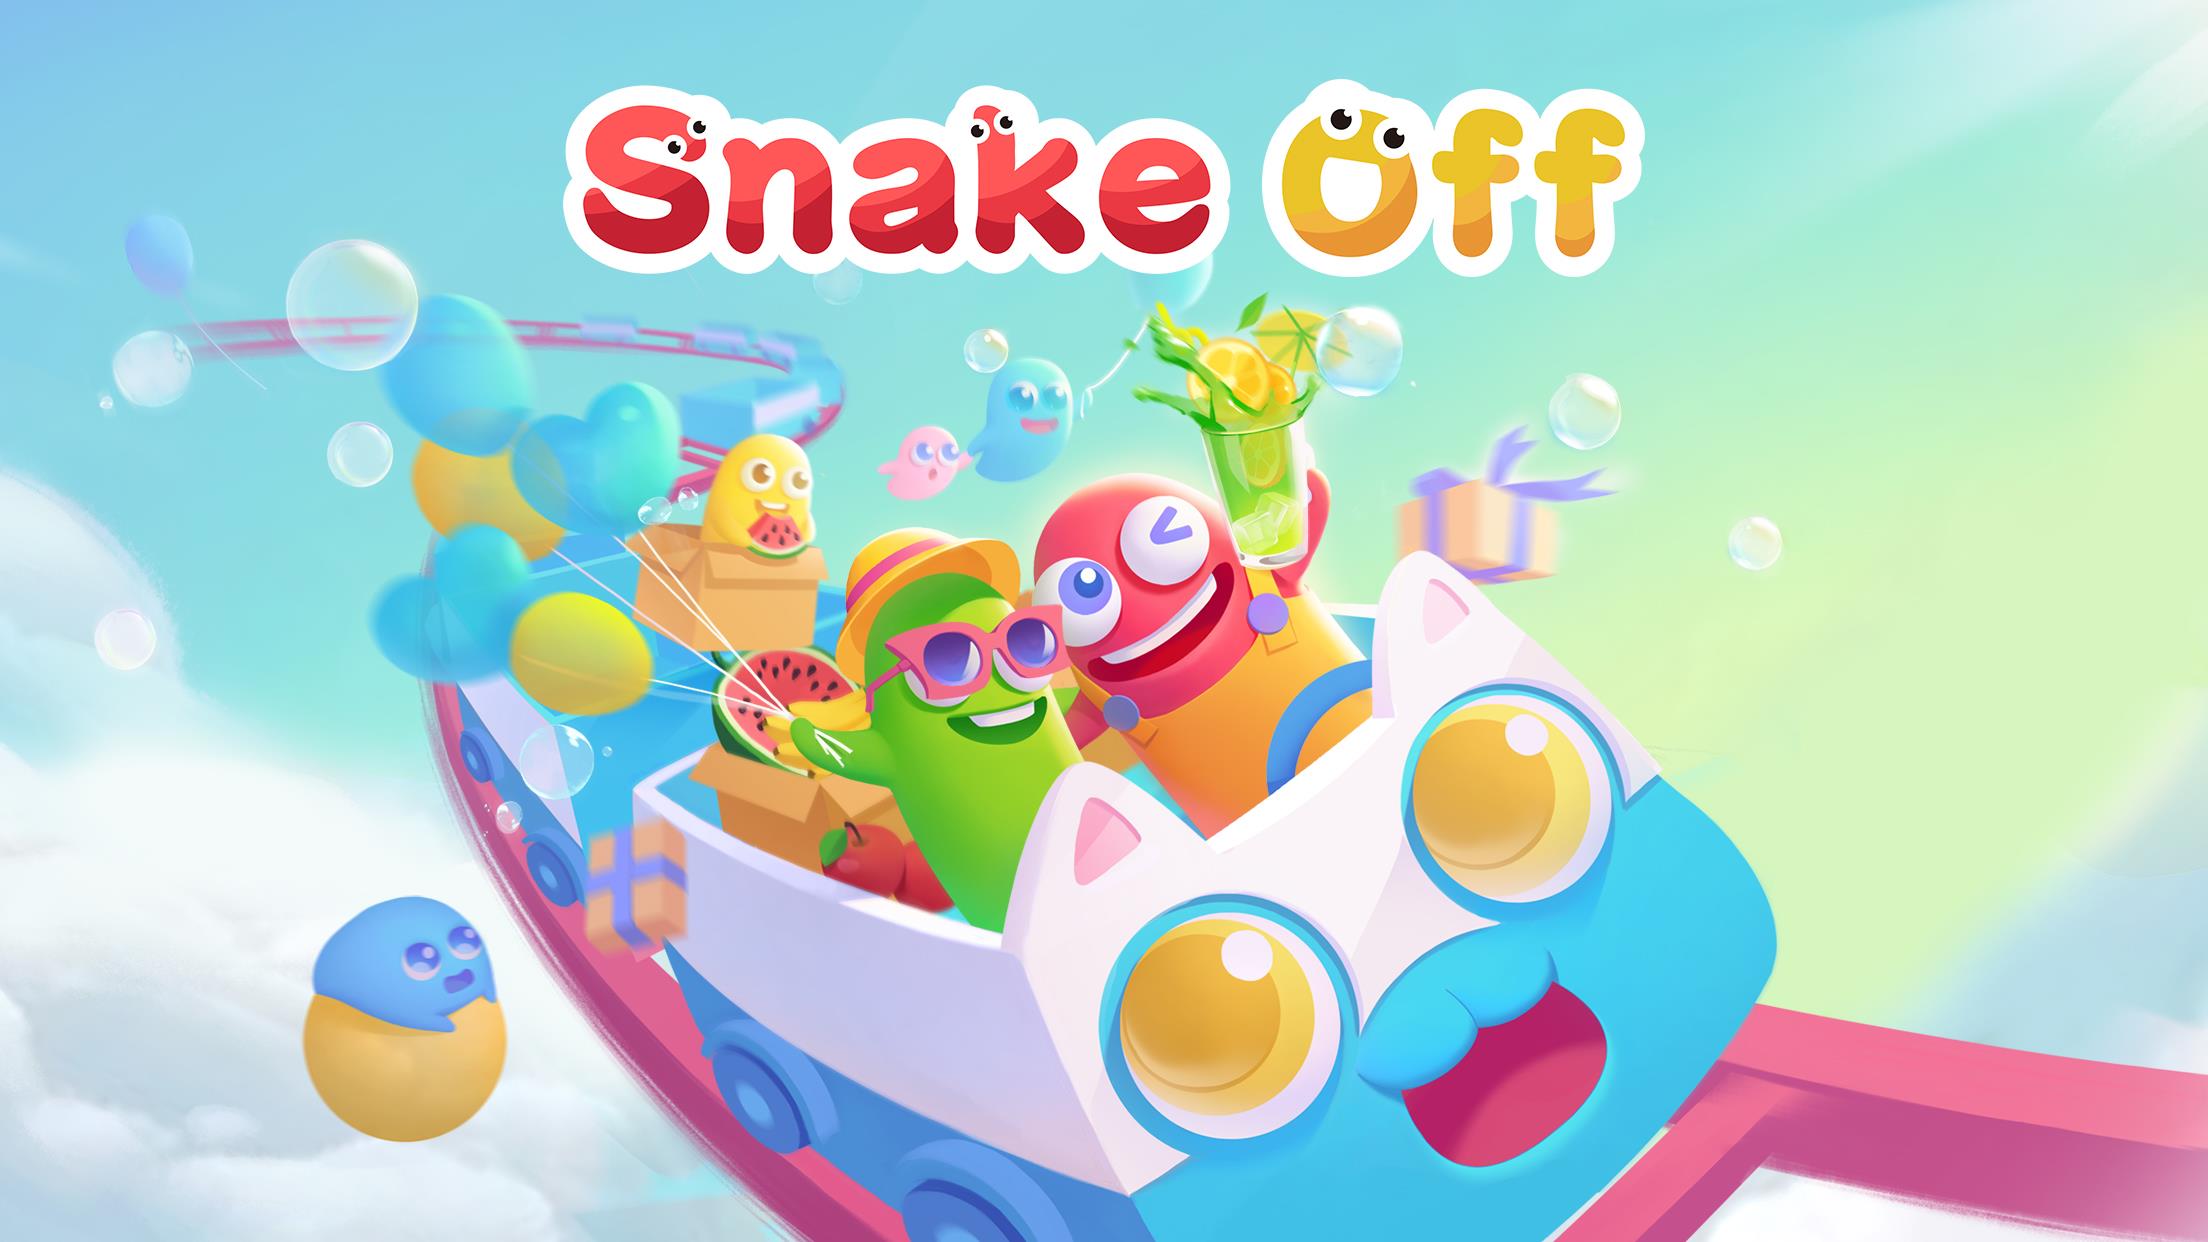 Snake Off - More Play,More Fun Screenshot 1